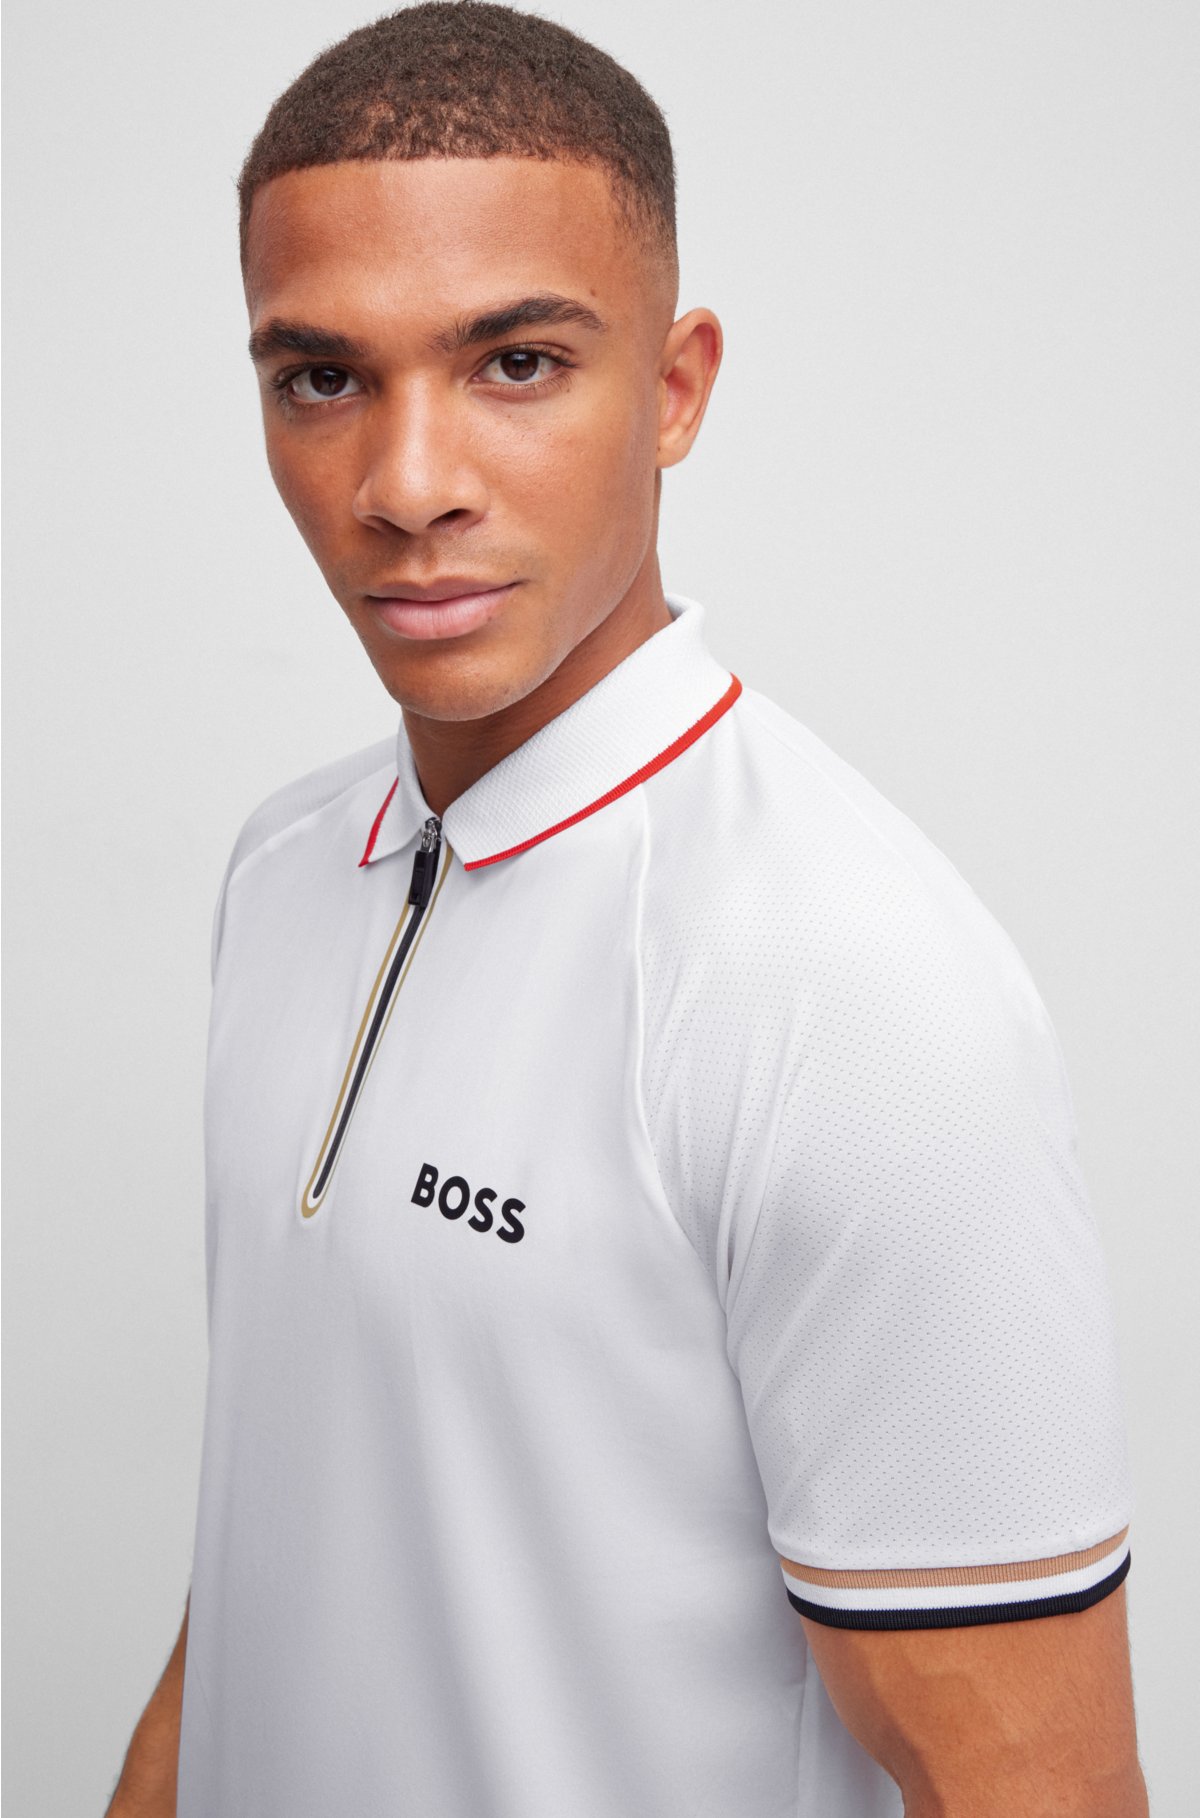 BOSS - BOSS x Matteo Berrettini slim-fit polo shirt with zip placket